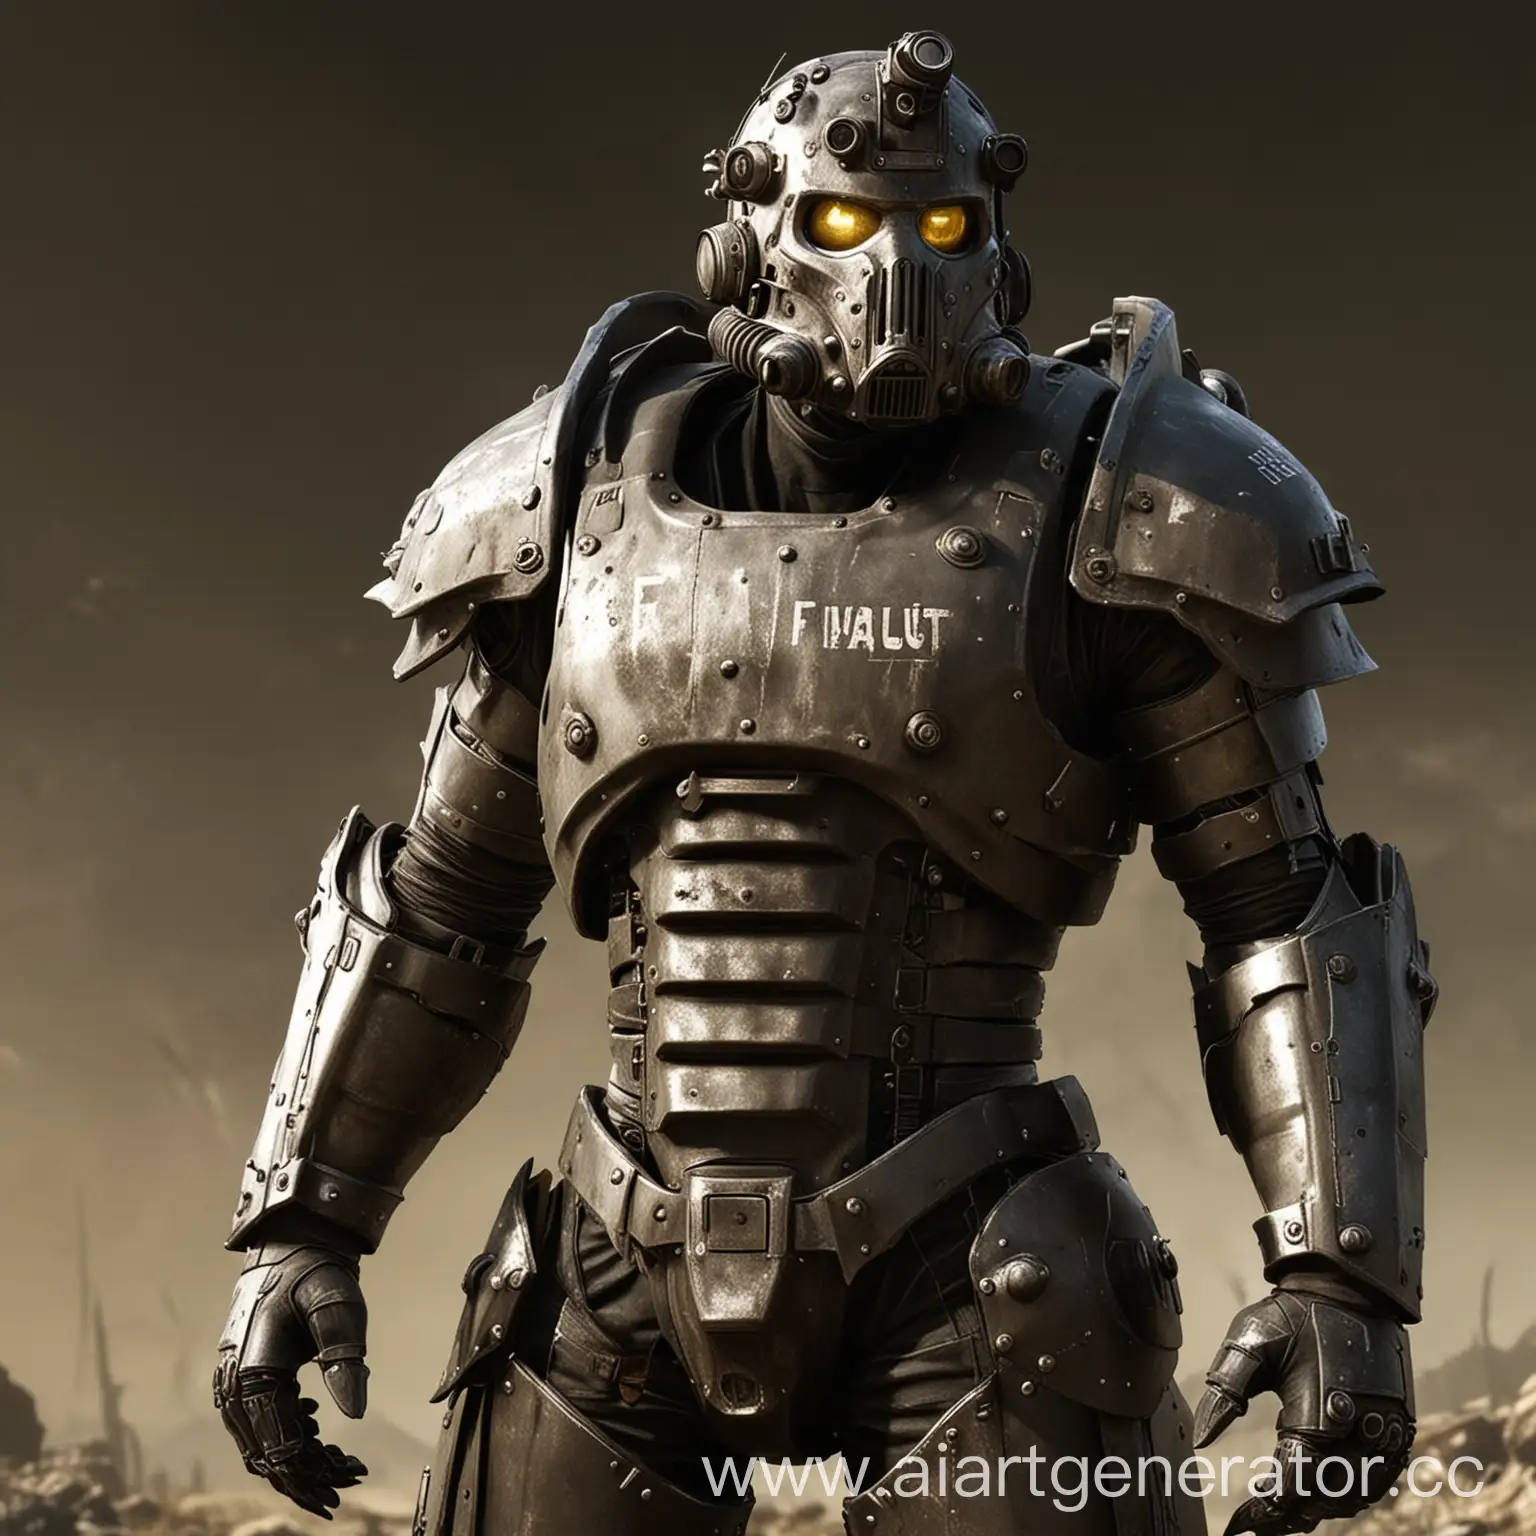 Impenetrable-Fallout-Armor-Futuristic-Warrior-in-Battle